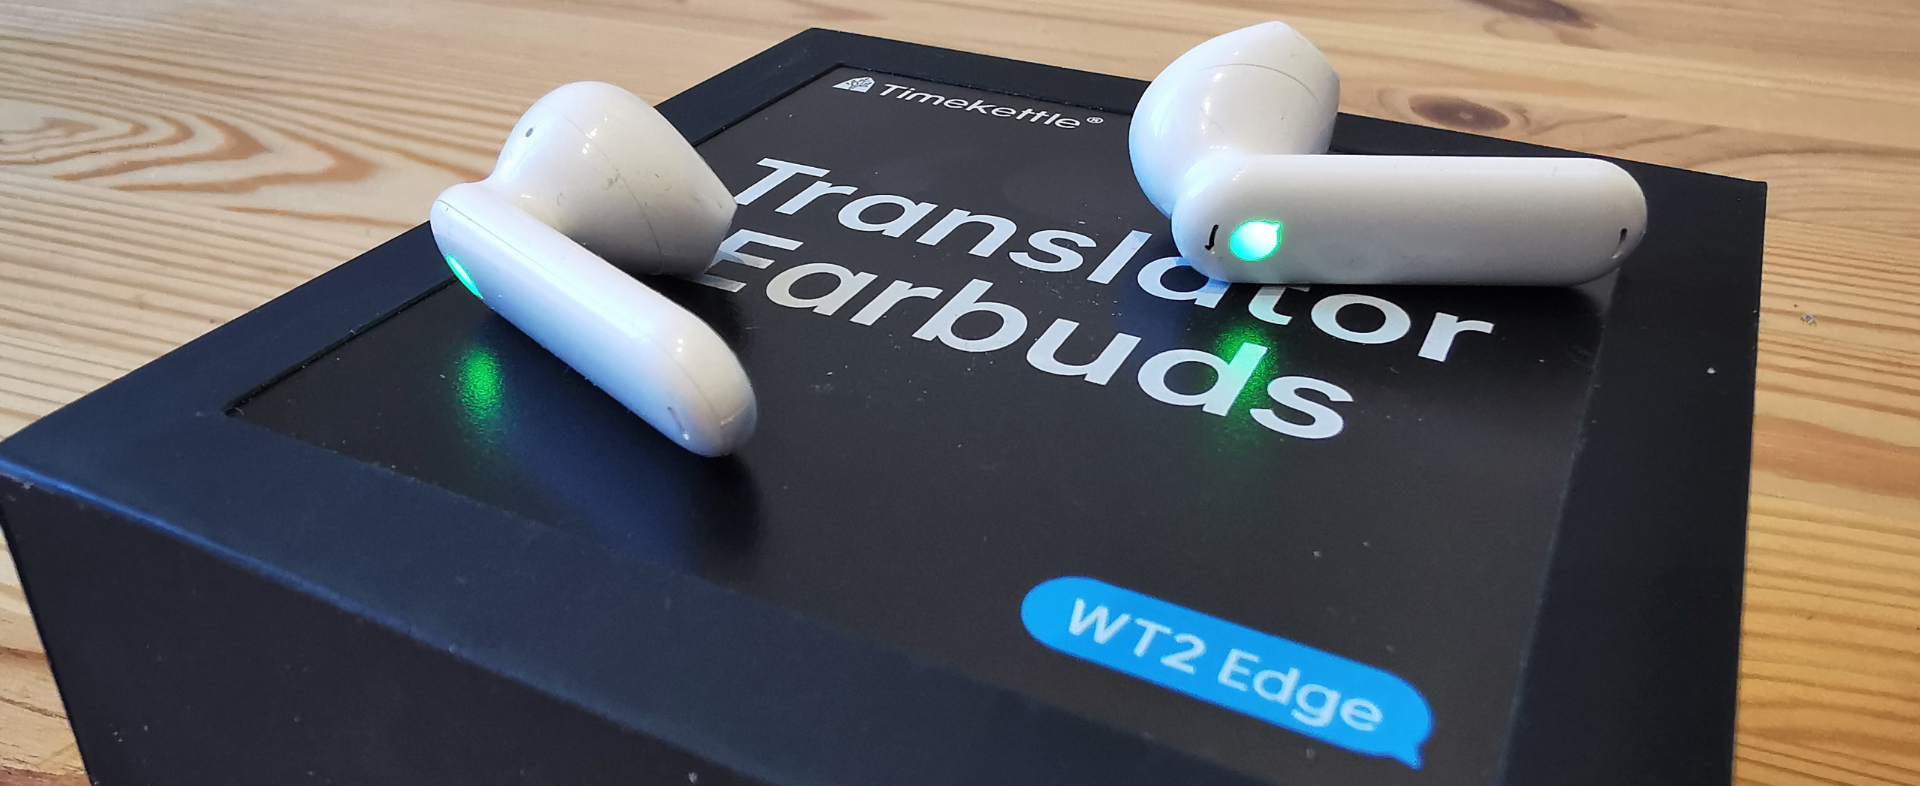 Timekettle WT2 Edge/W3 Real-time Translator Earbuds - Black for sale online